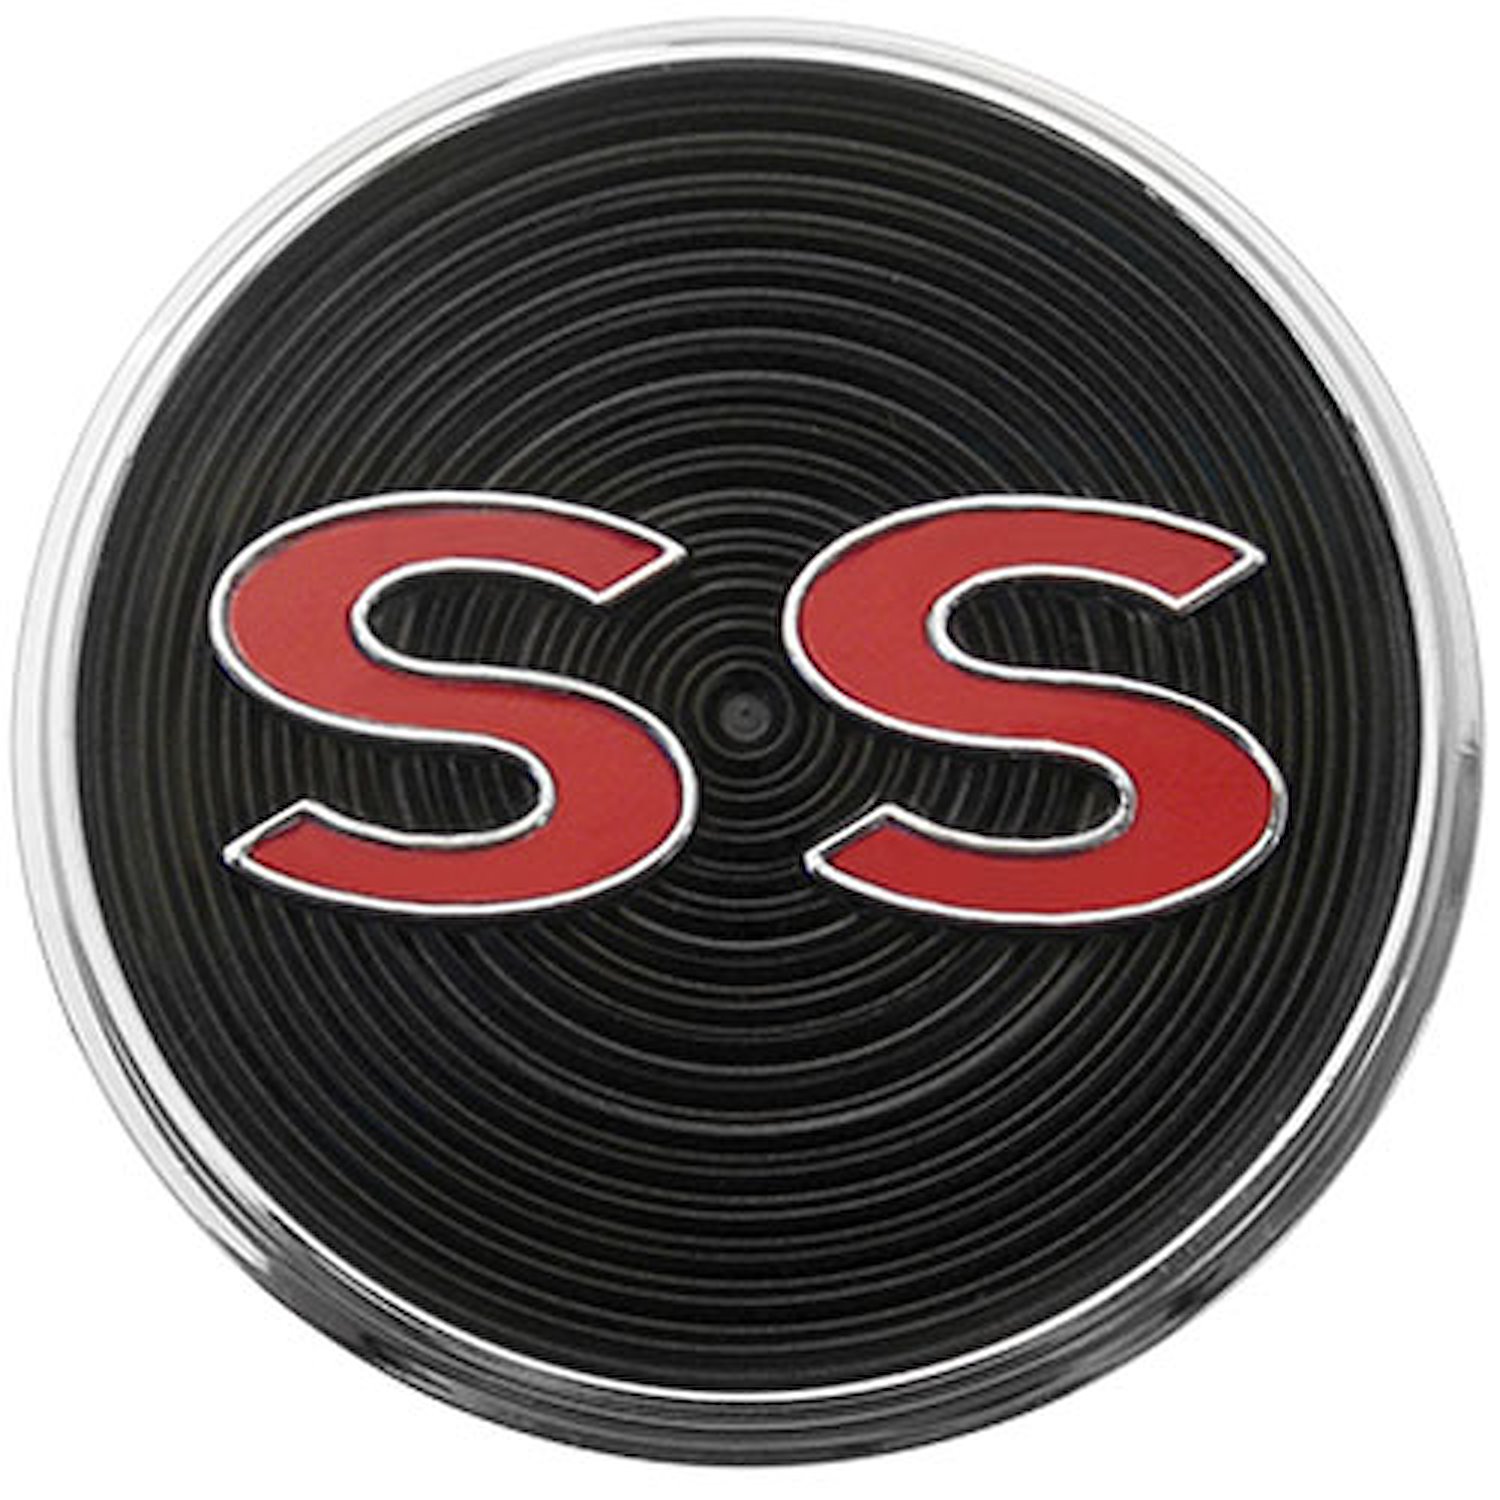 Console Emblem 1964 Chevy Impala SS